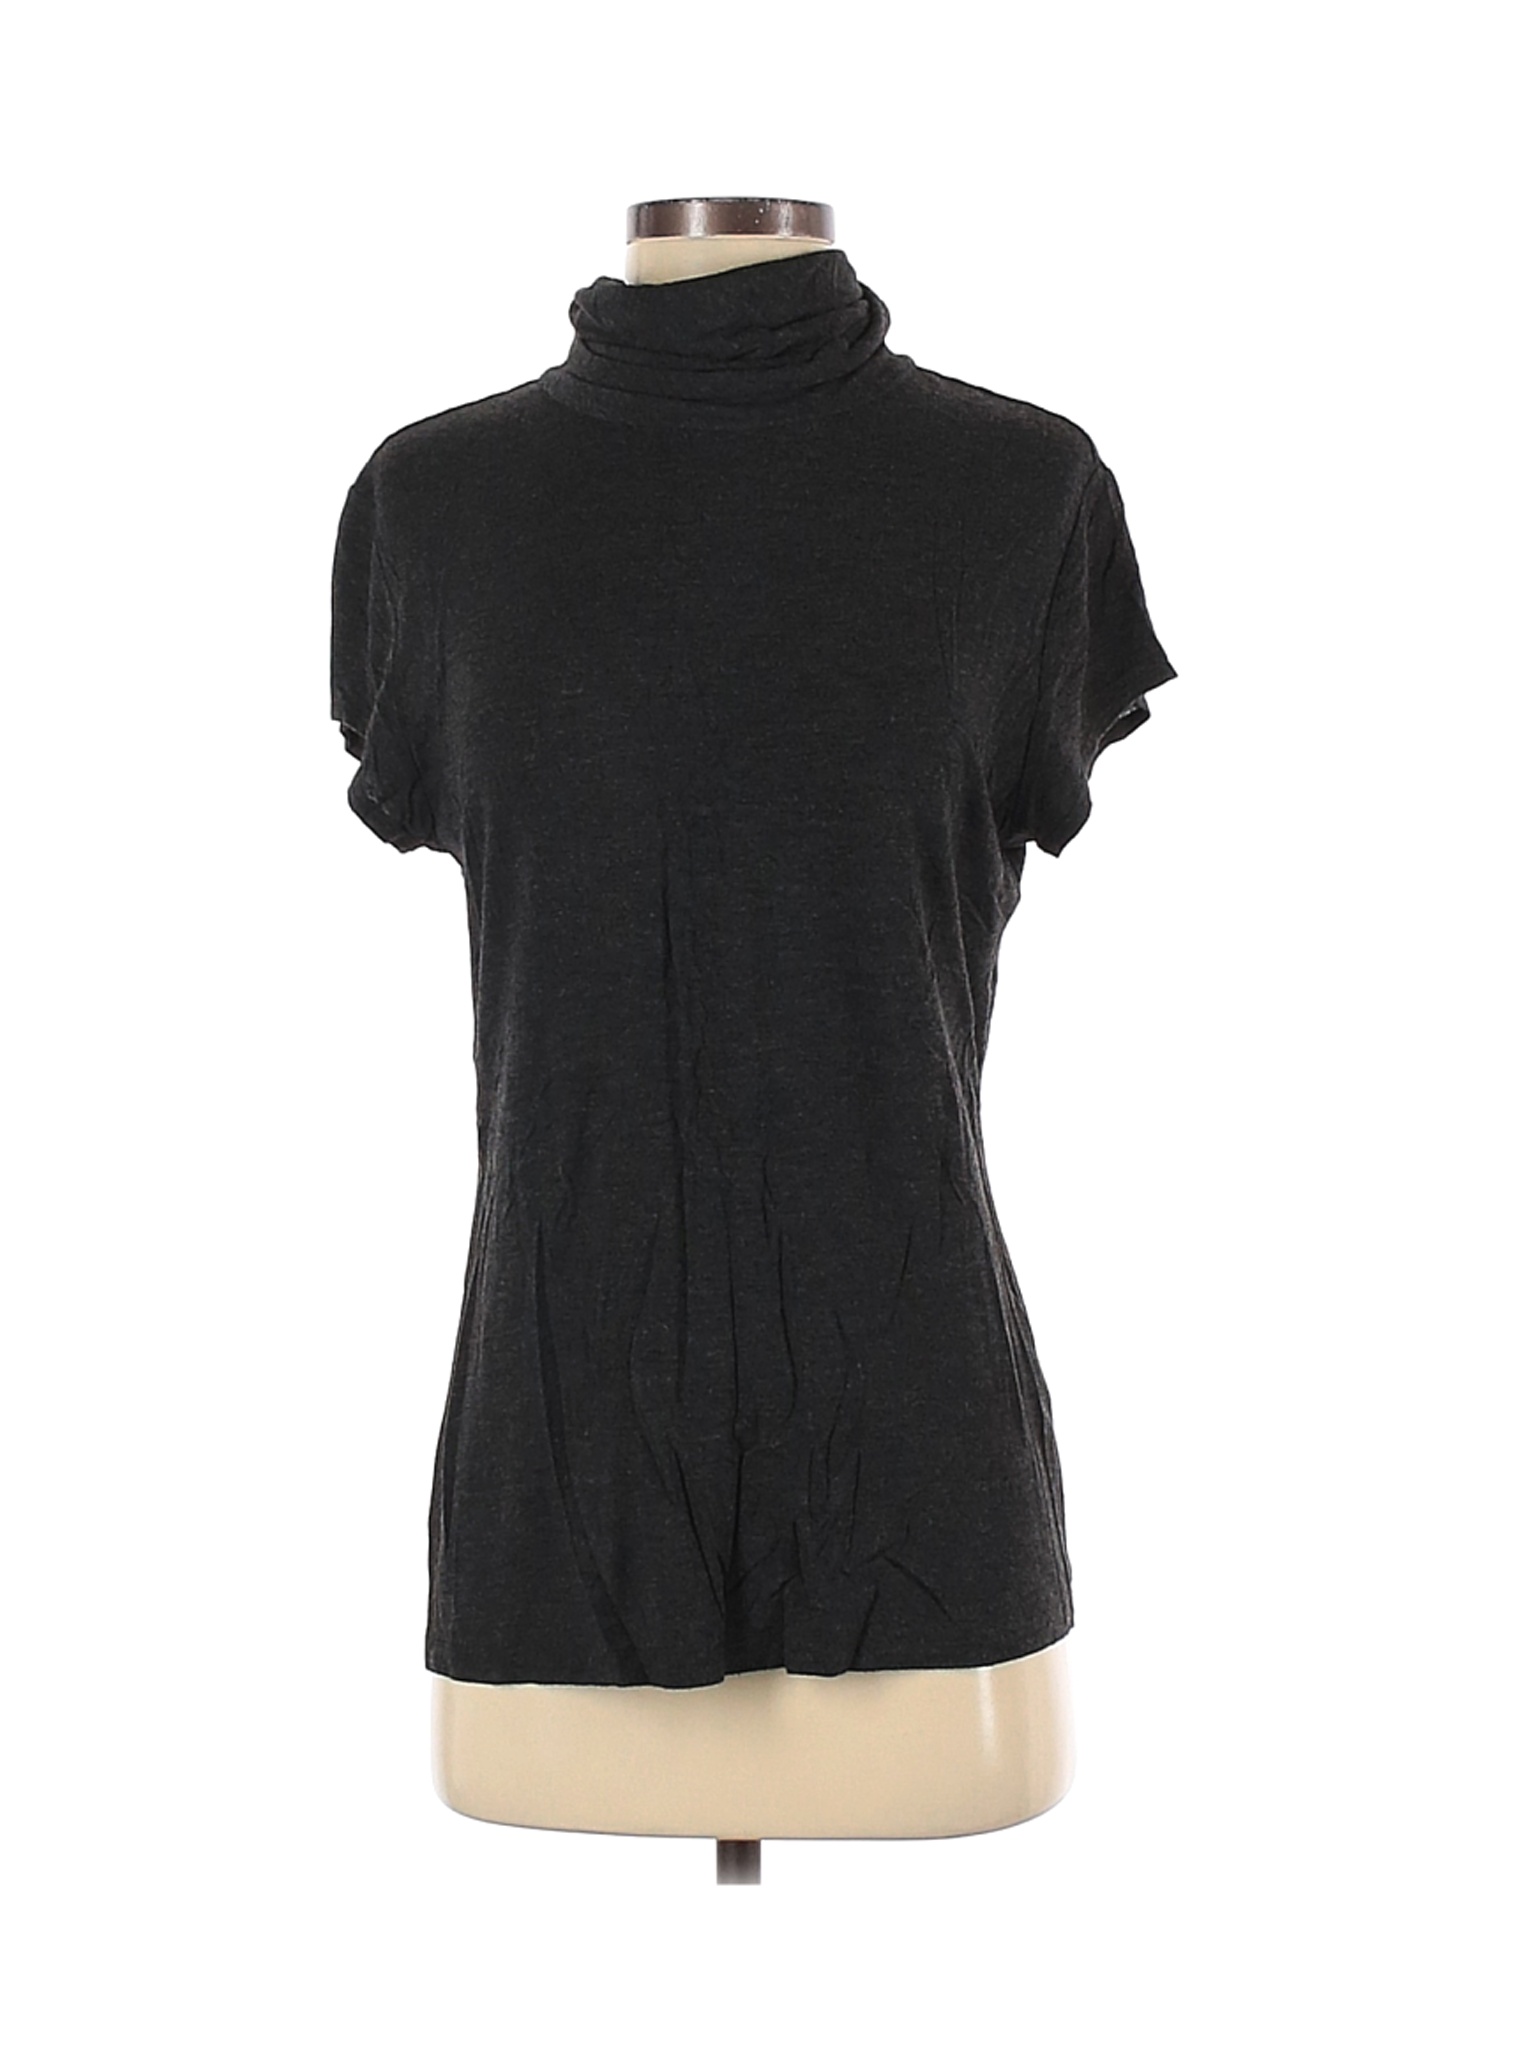 Madison Studio Women Black Short Sleeve T-Shirt M | eBay